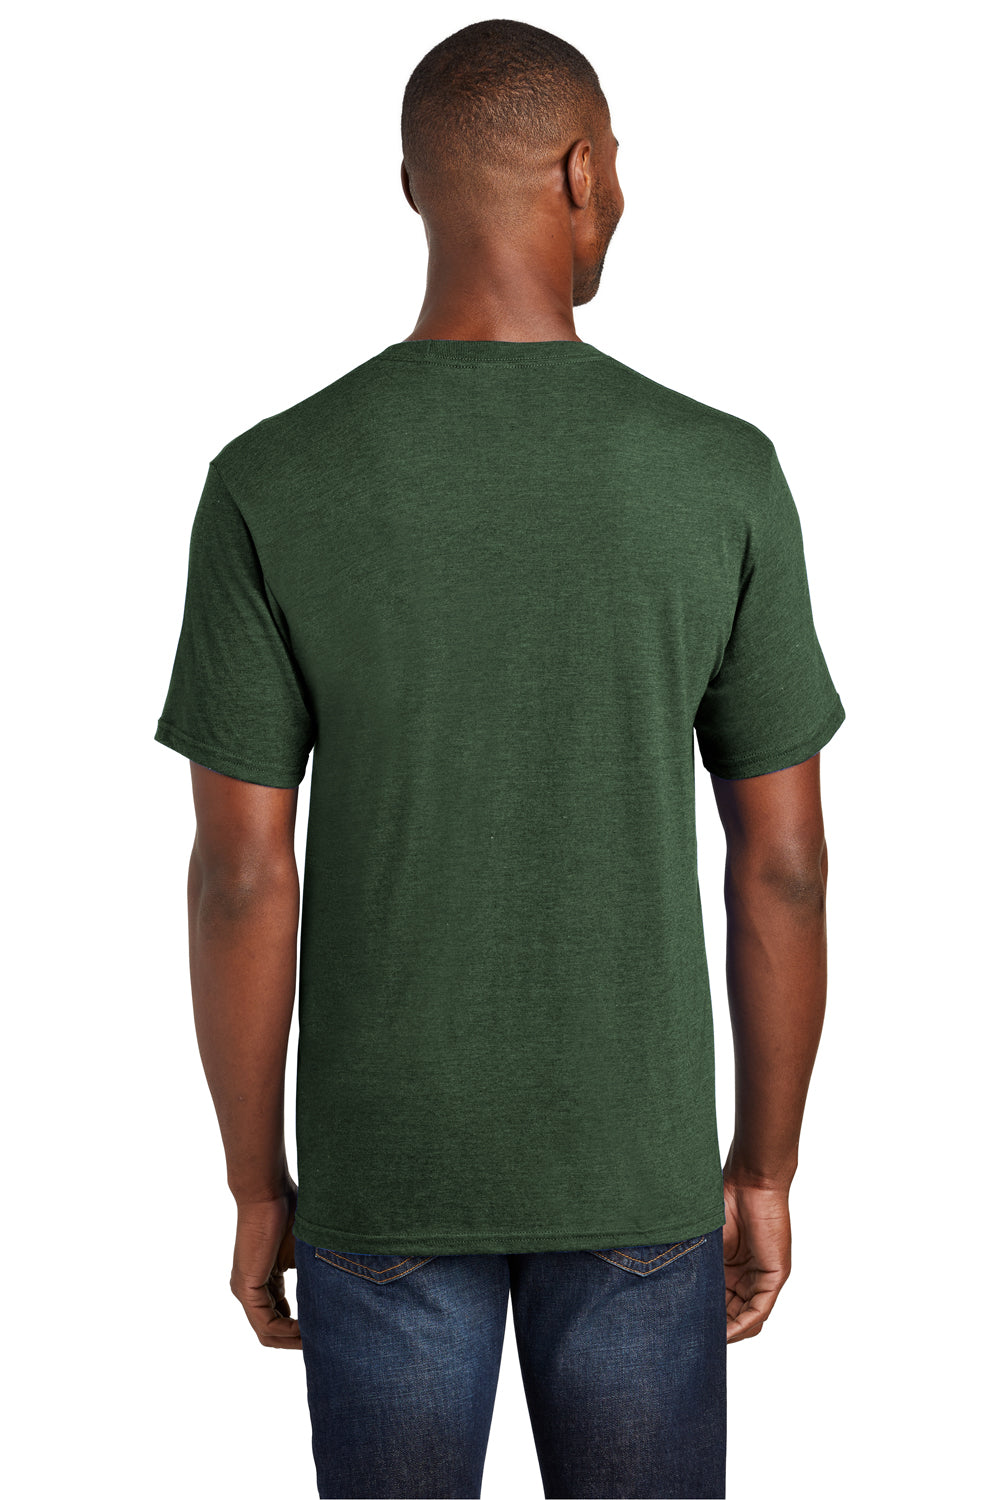 Port & Company PC455 Mens Fan Favorite Short Sleeve Crewneck T-Shirt Heather Forest Green Back